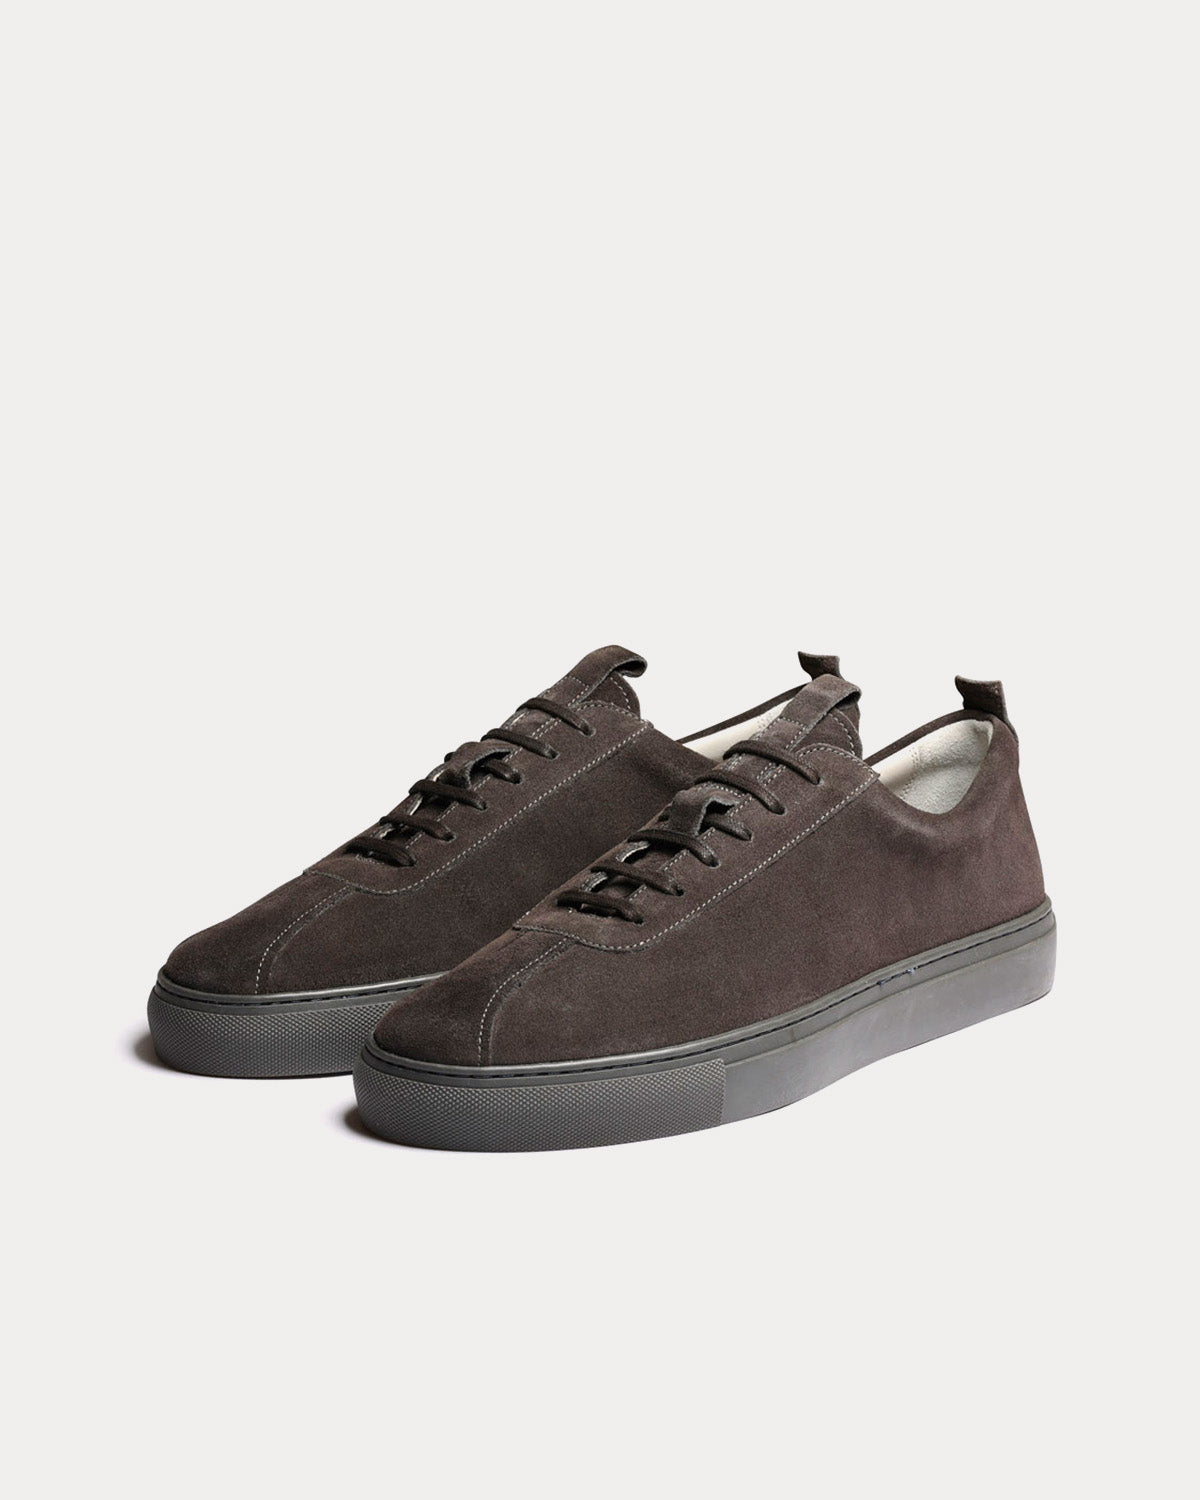 Grenson - Sneaker 1 Suede Dark Grey Low Top Sneakers